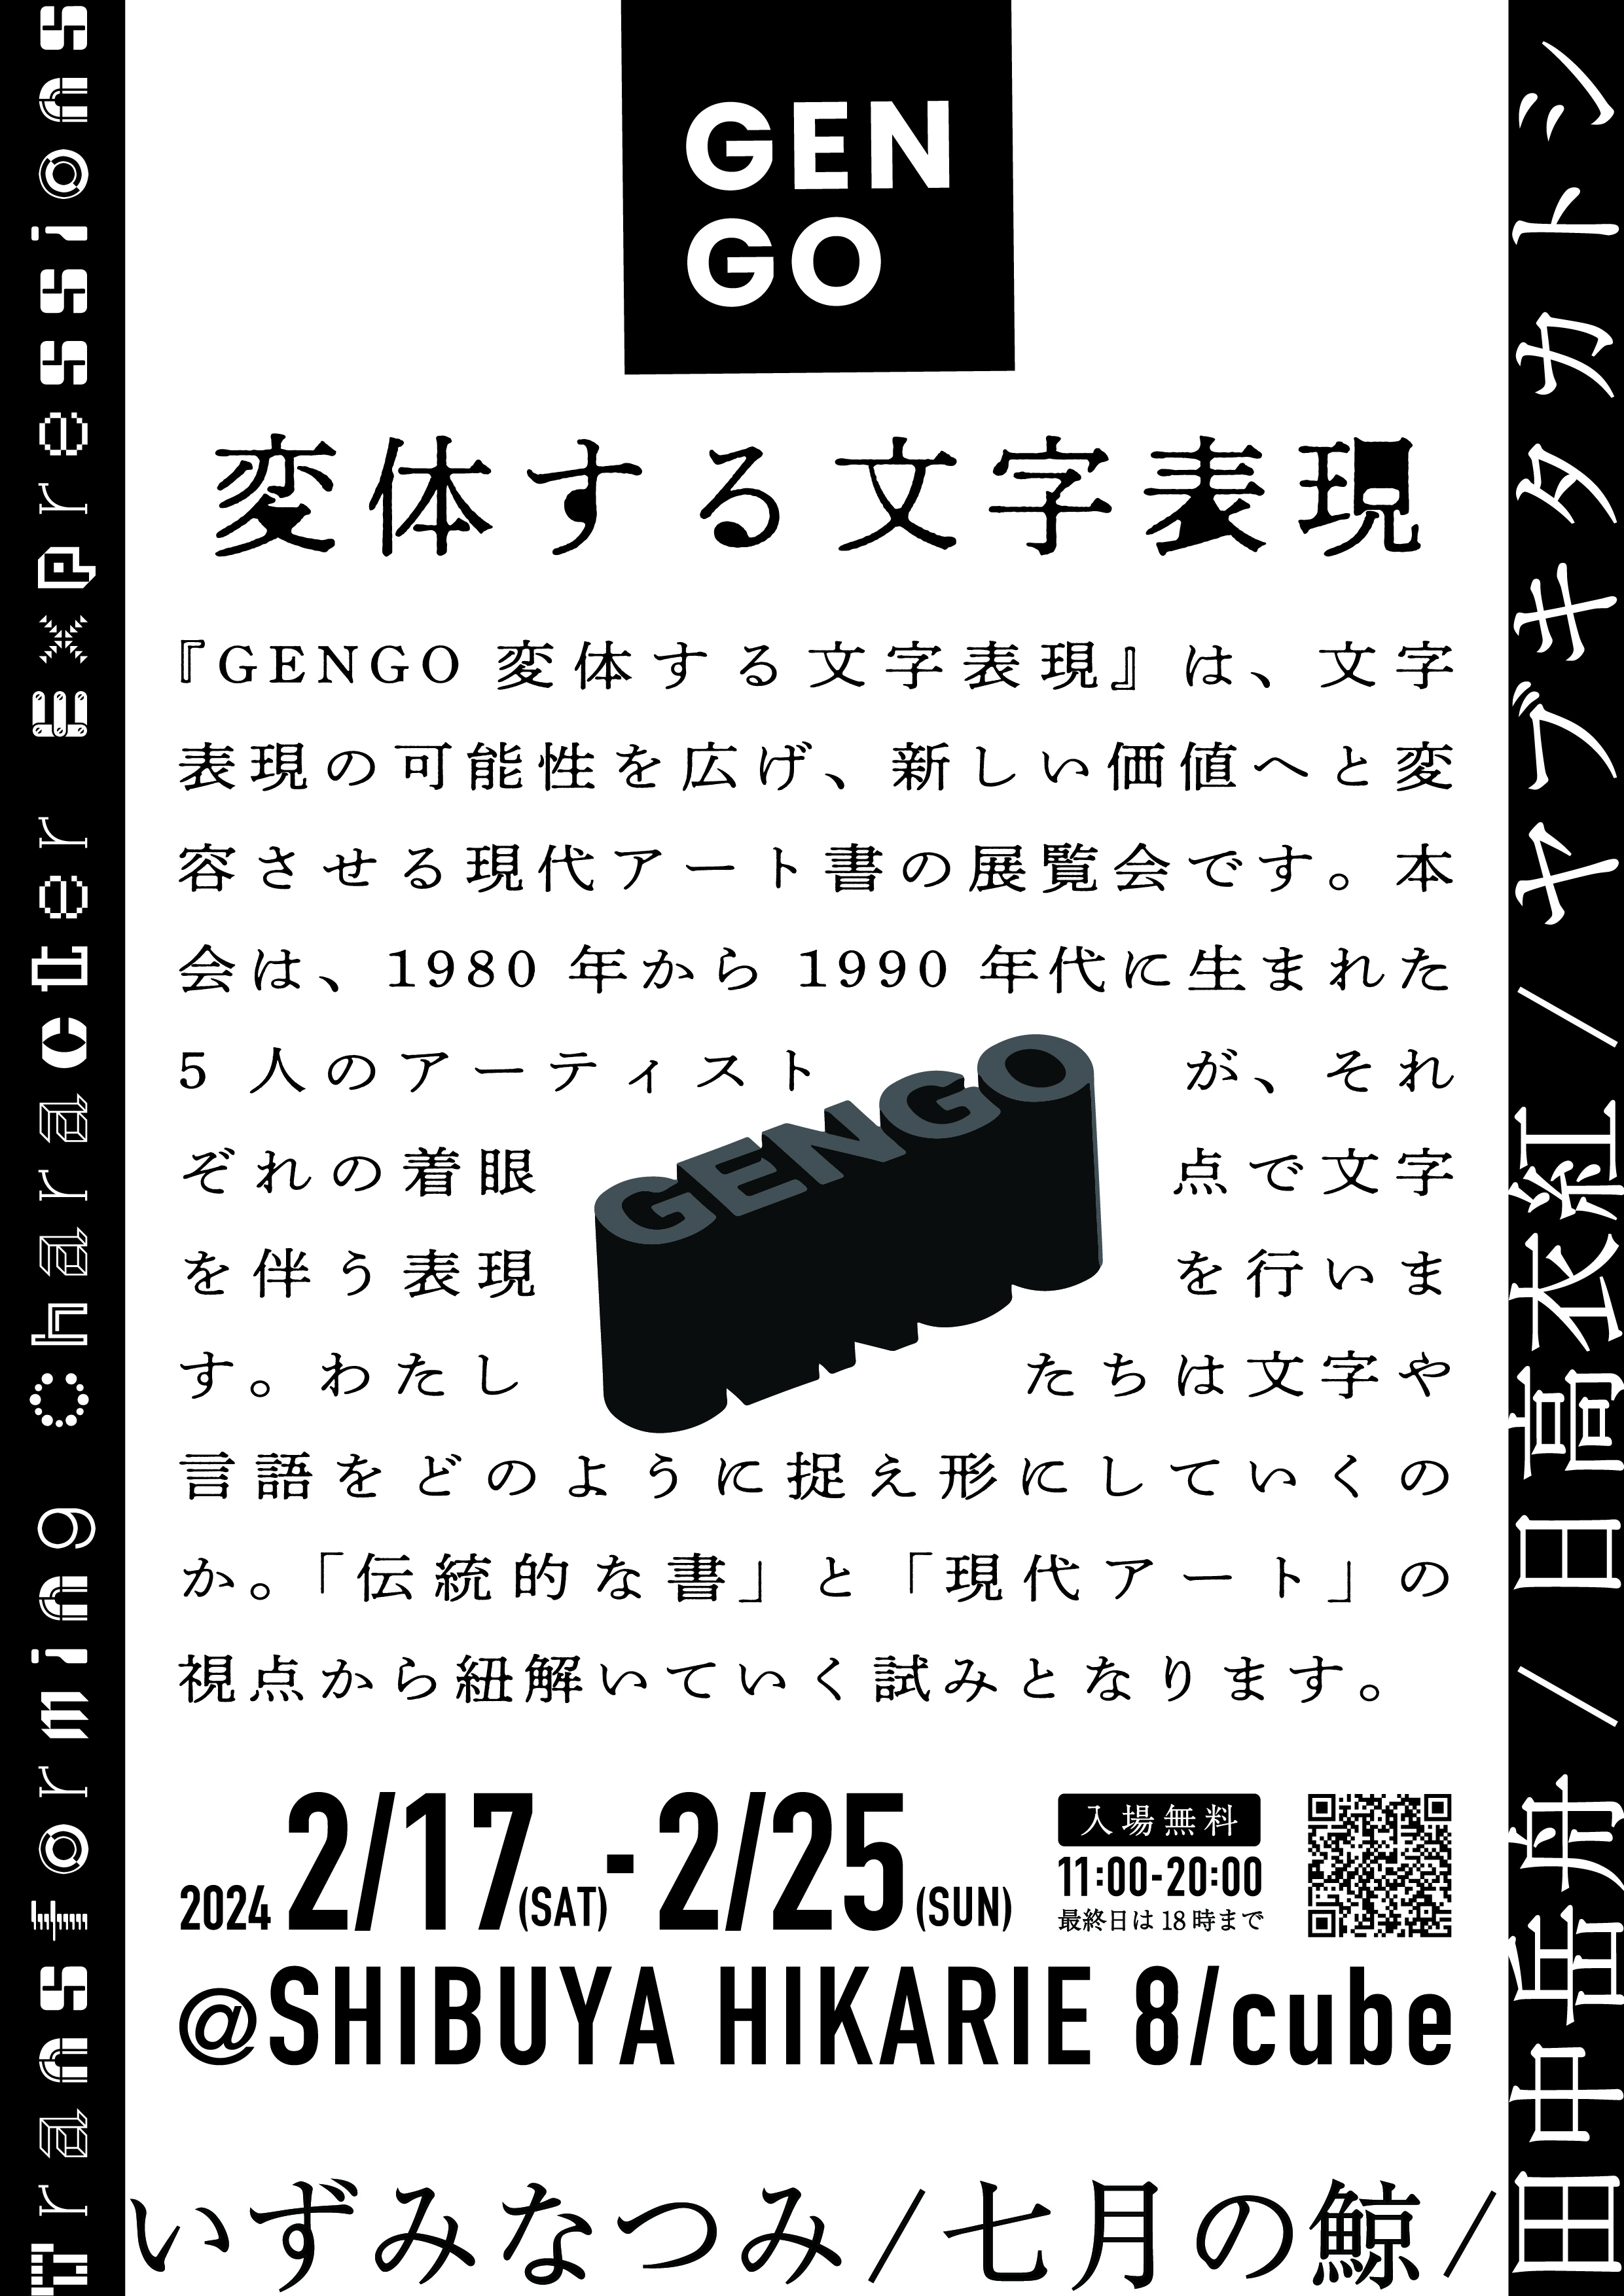 GENGO -変体する文字表現-」 （渋谷ヒカリエ 8/ CUBE 1, 2, 3 